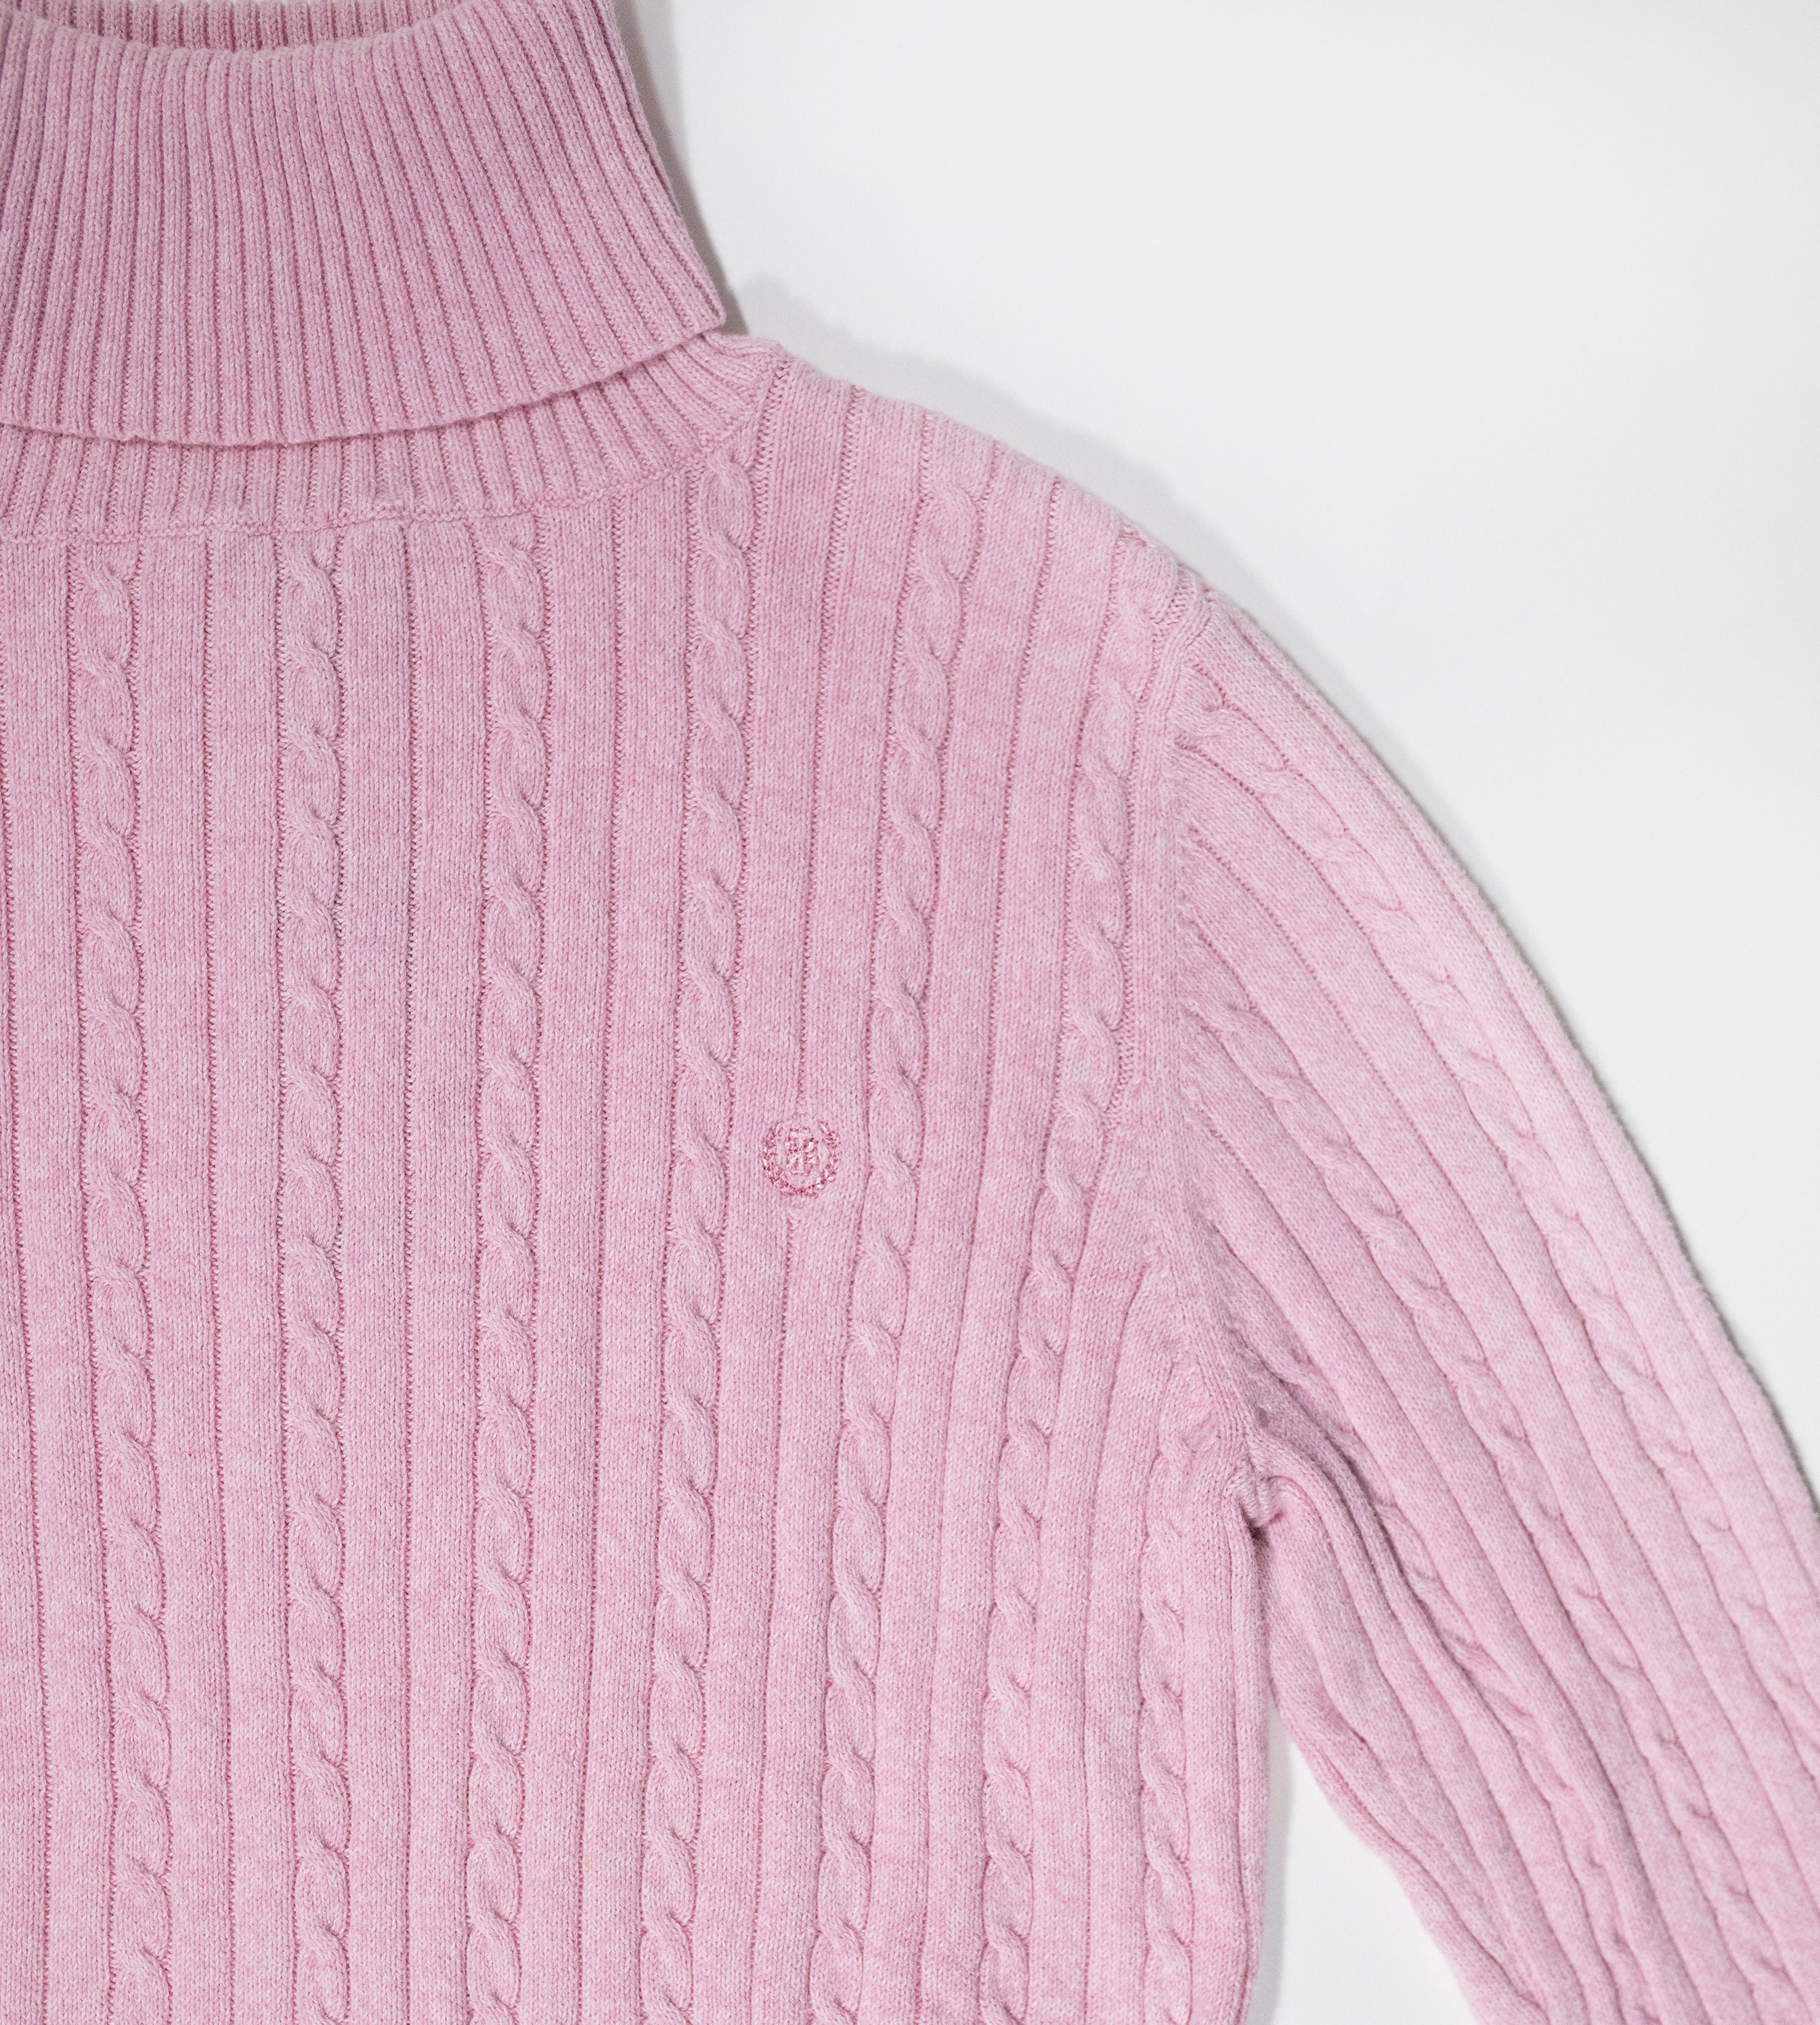 Baby Pink Turtleneck Sweater